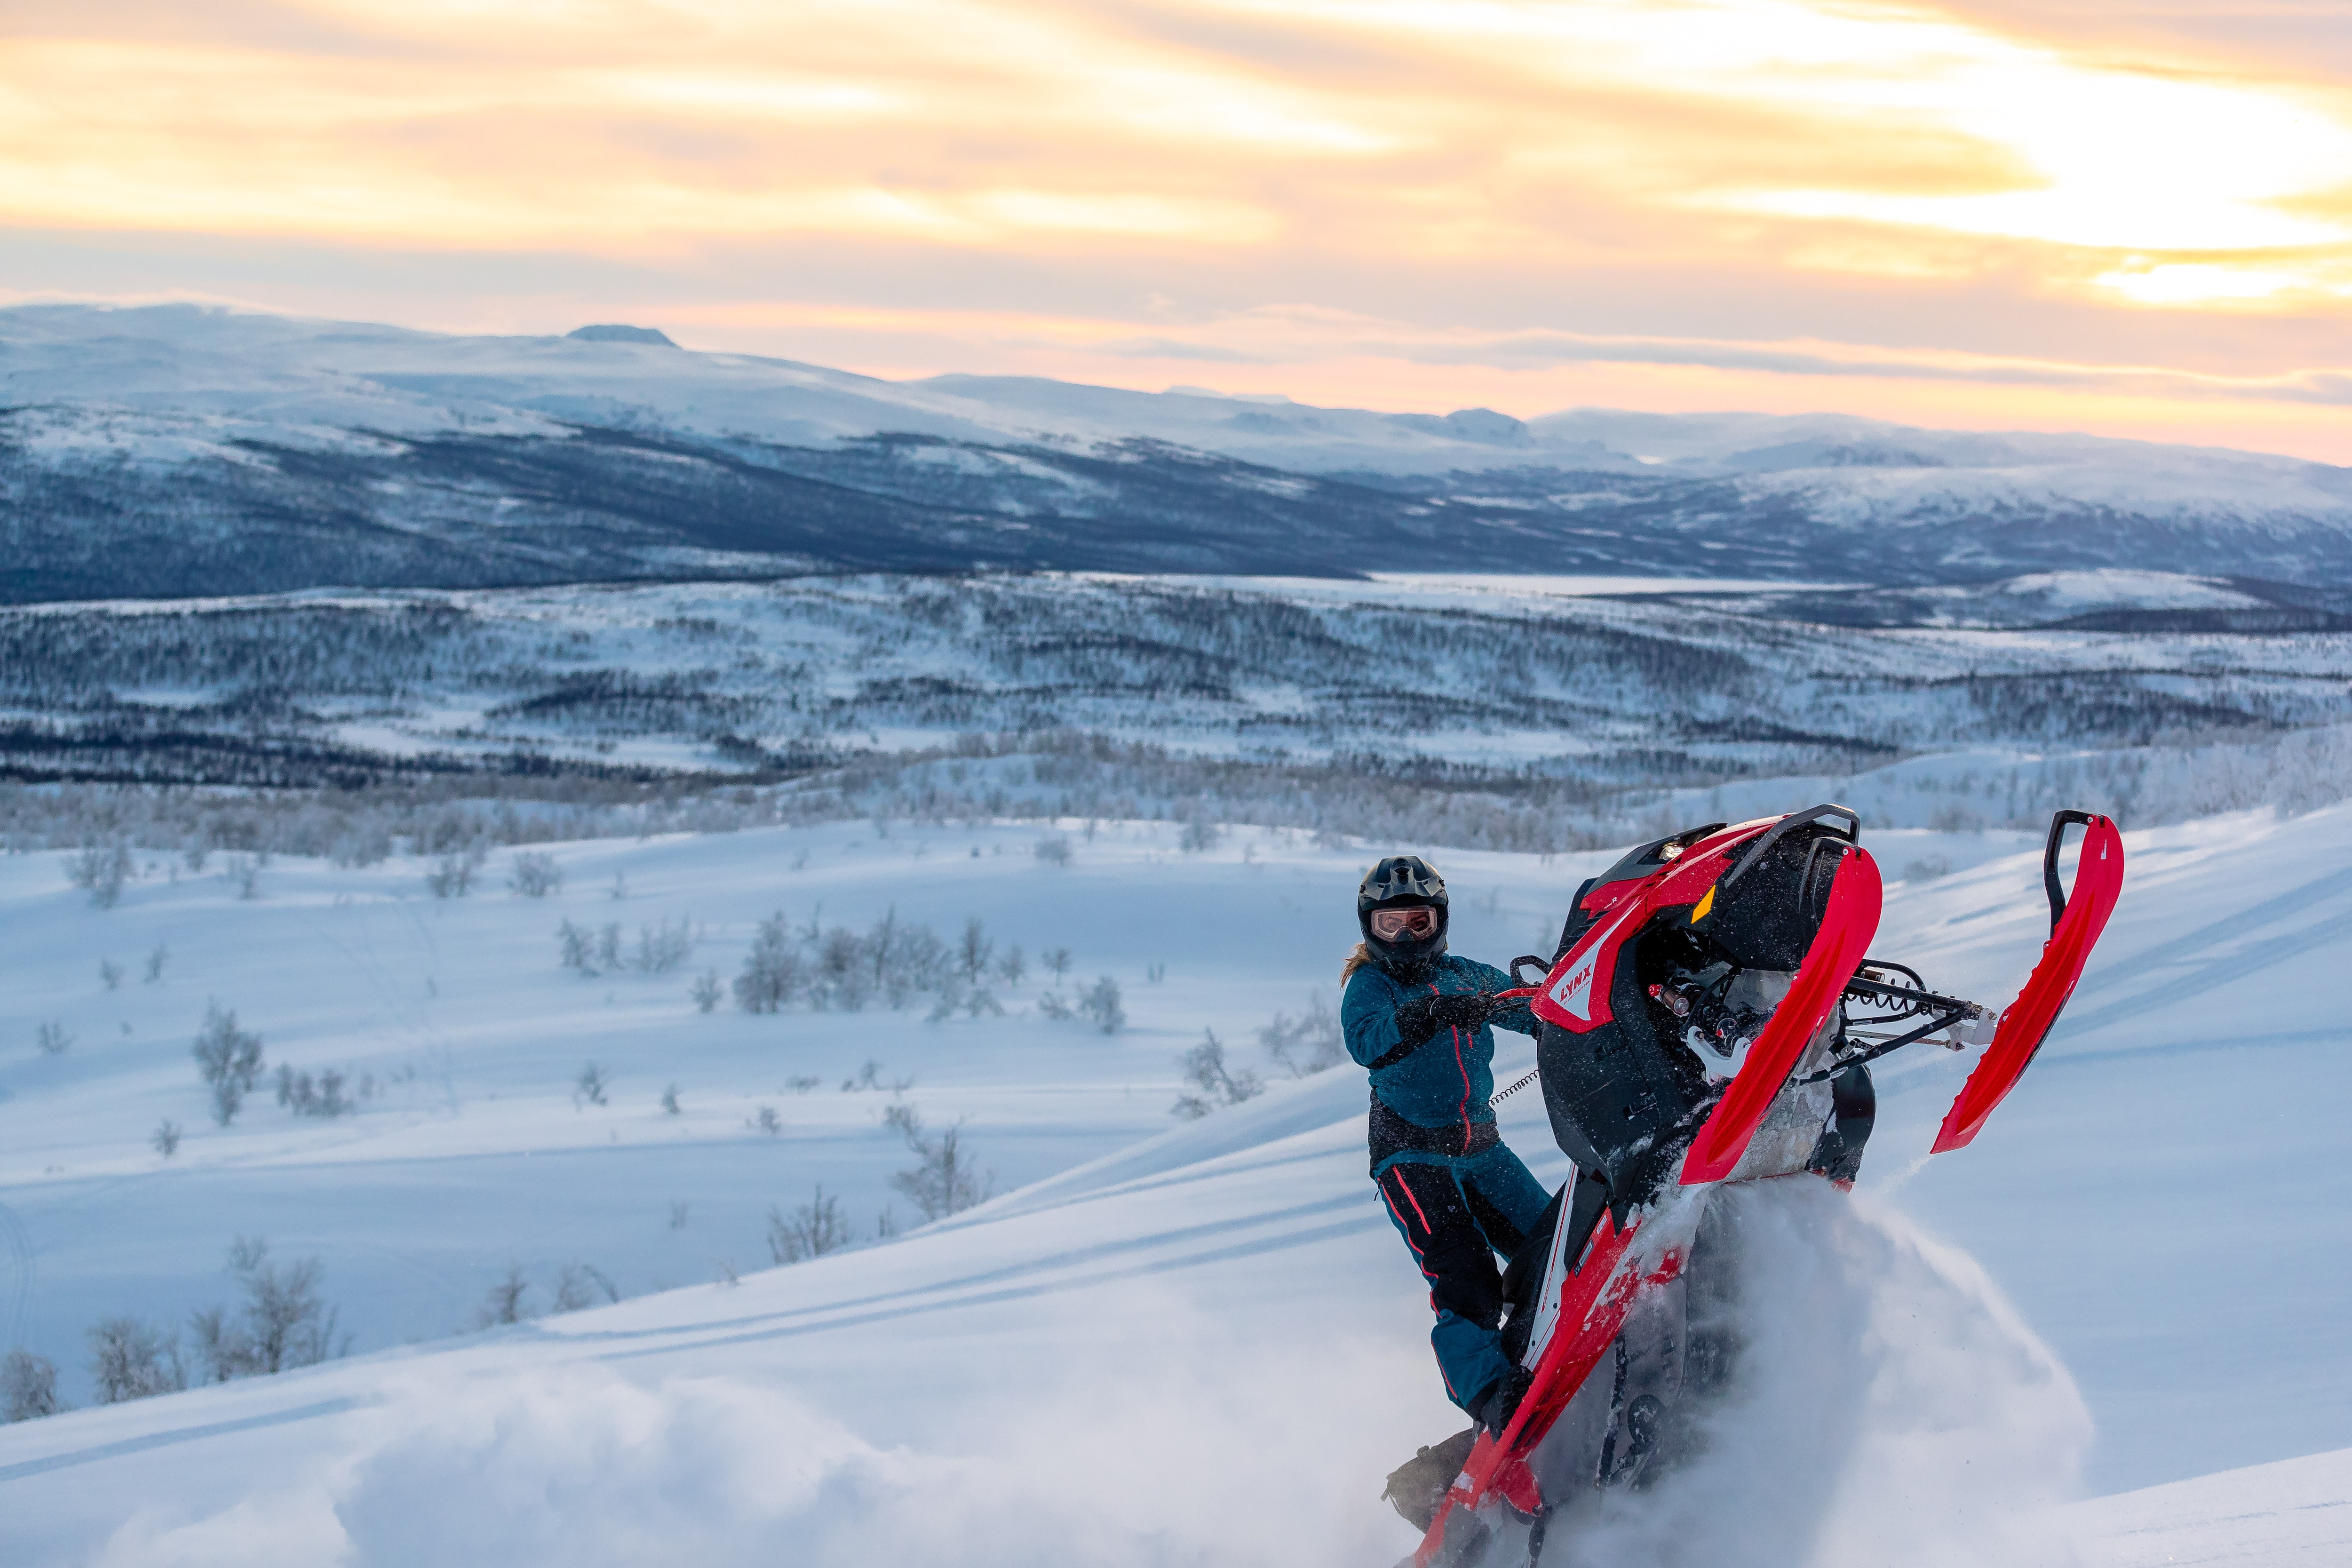 Mariell Kvickström doing a jump with a snowmobile